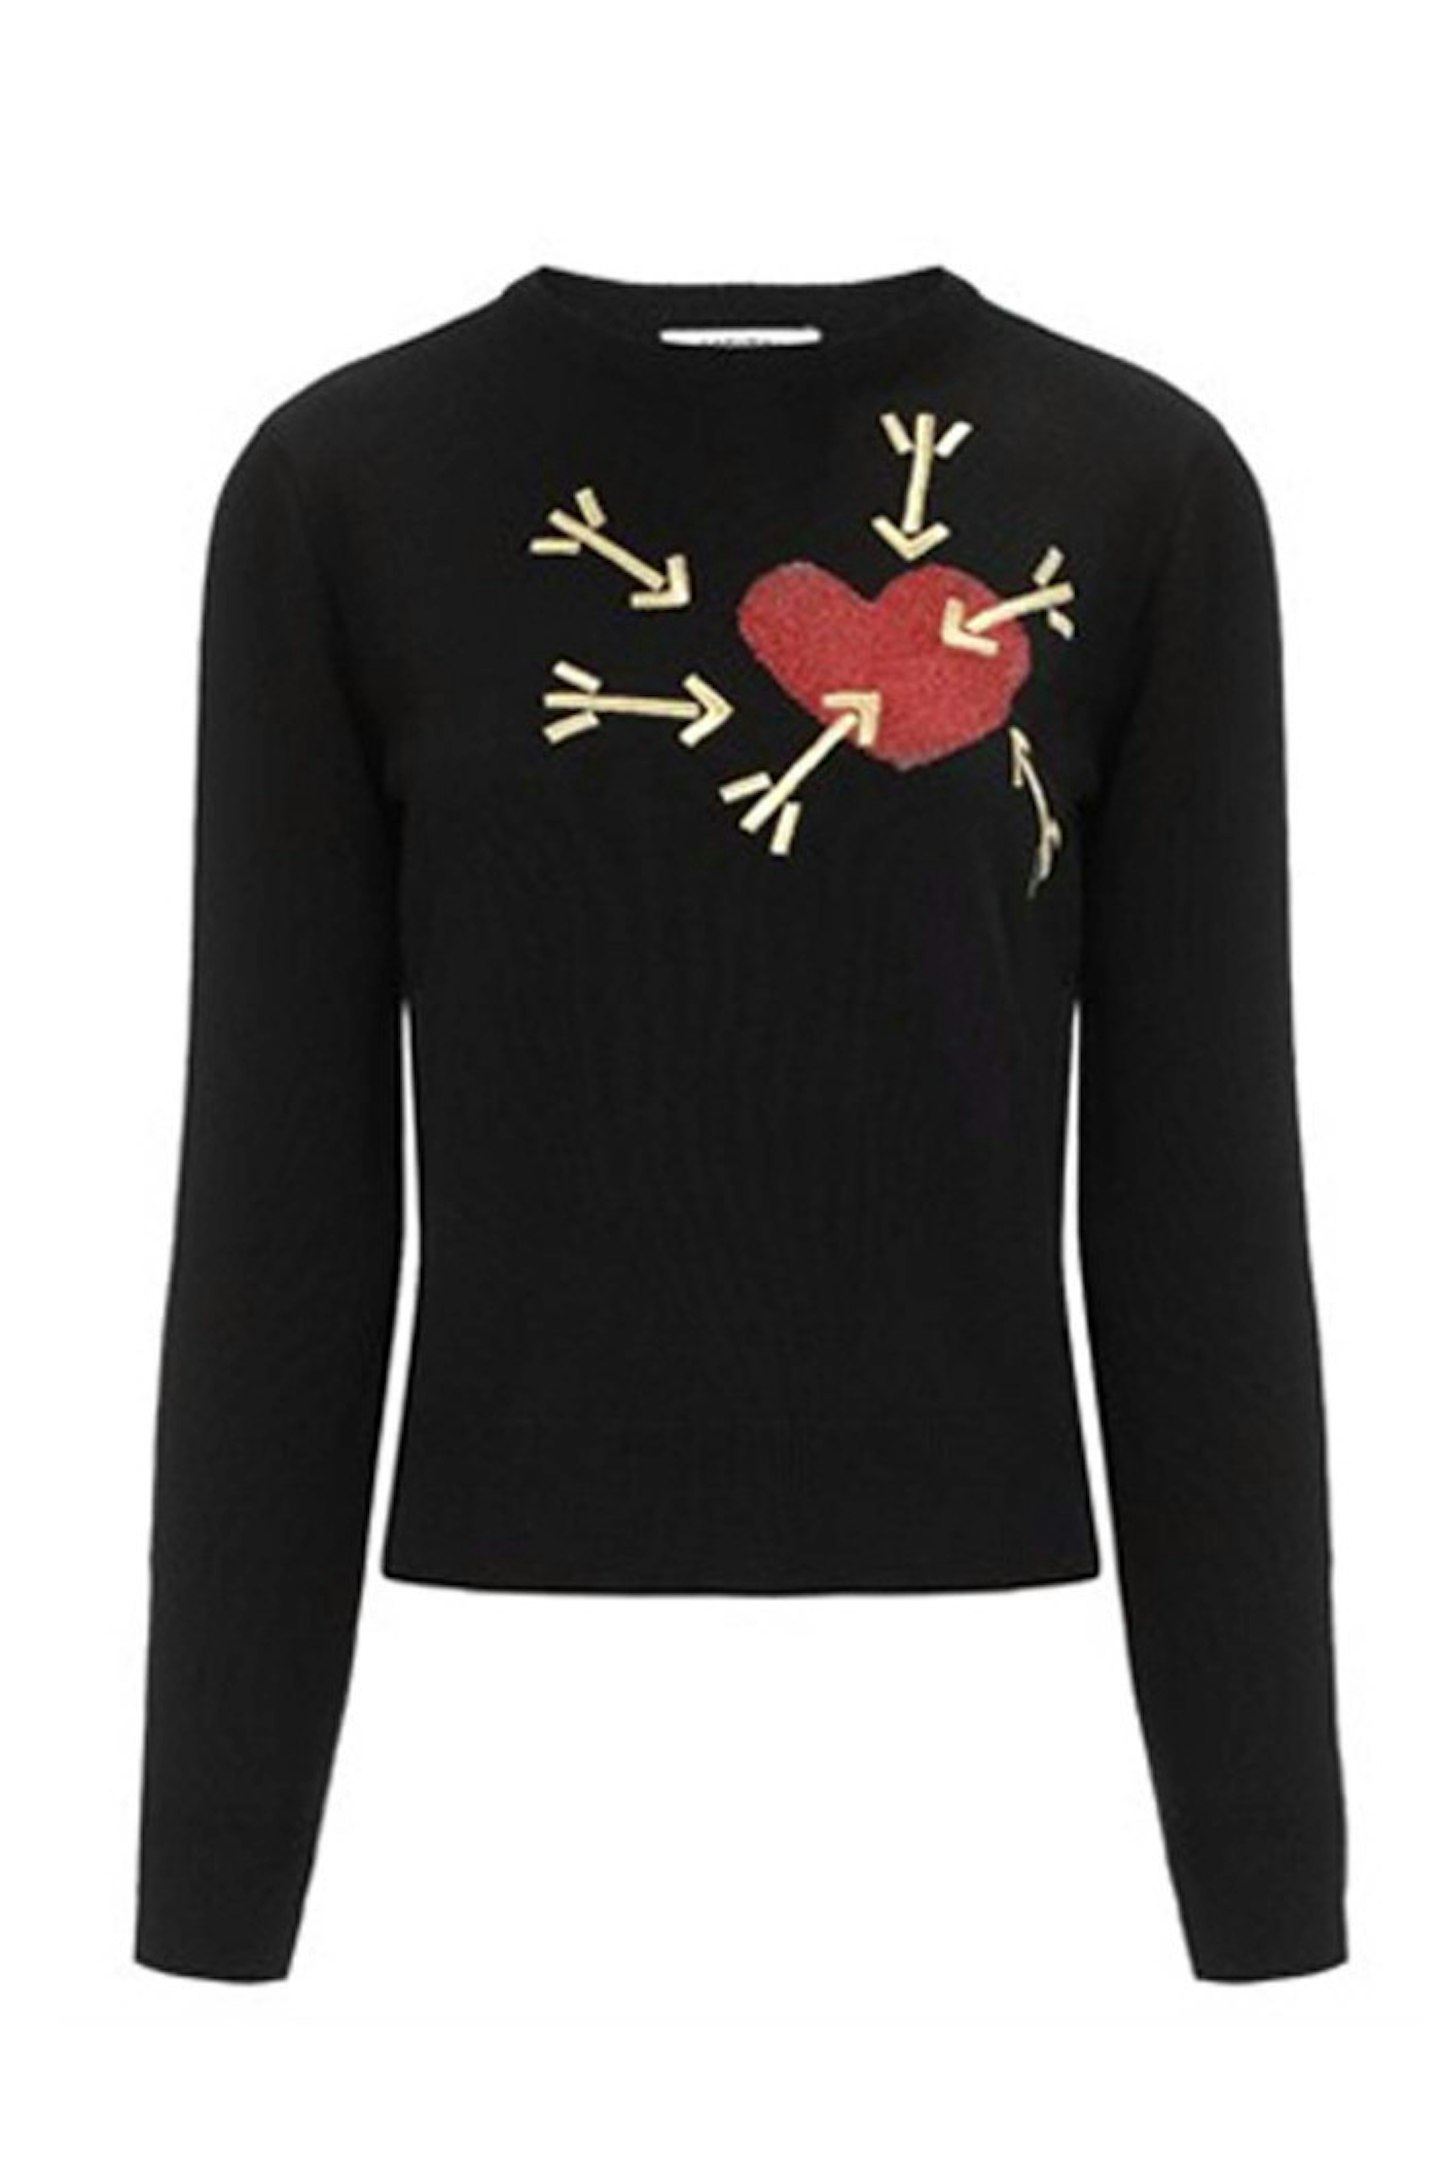 8. Black embroidered heart jumper, £250, Carven at Avenue 32